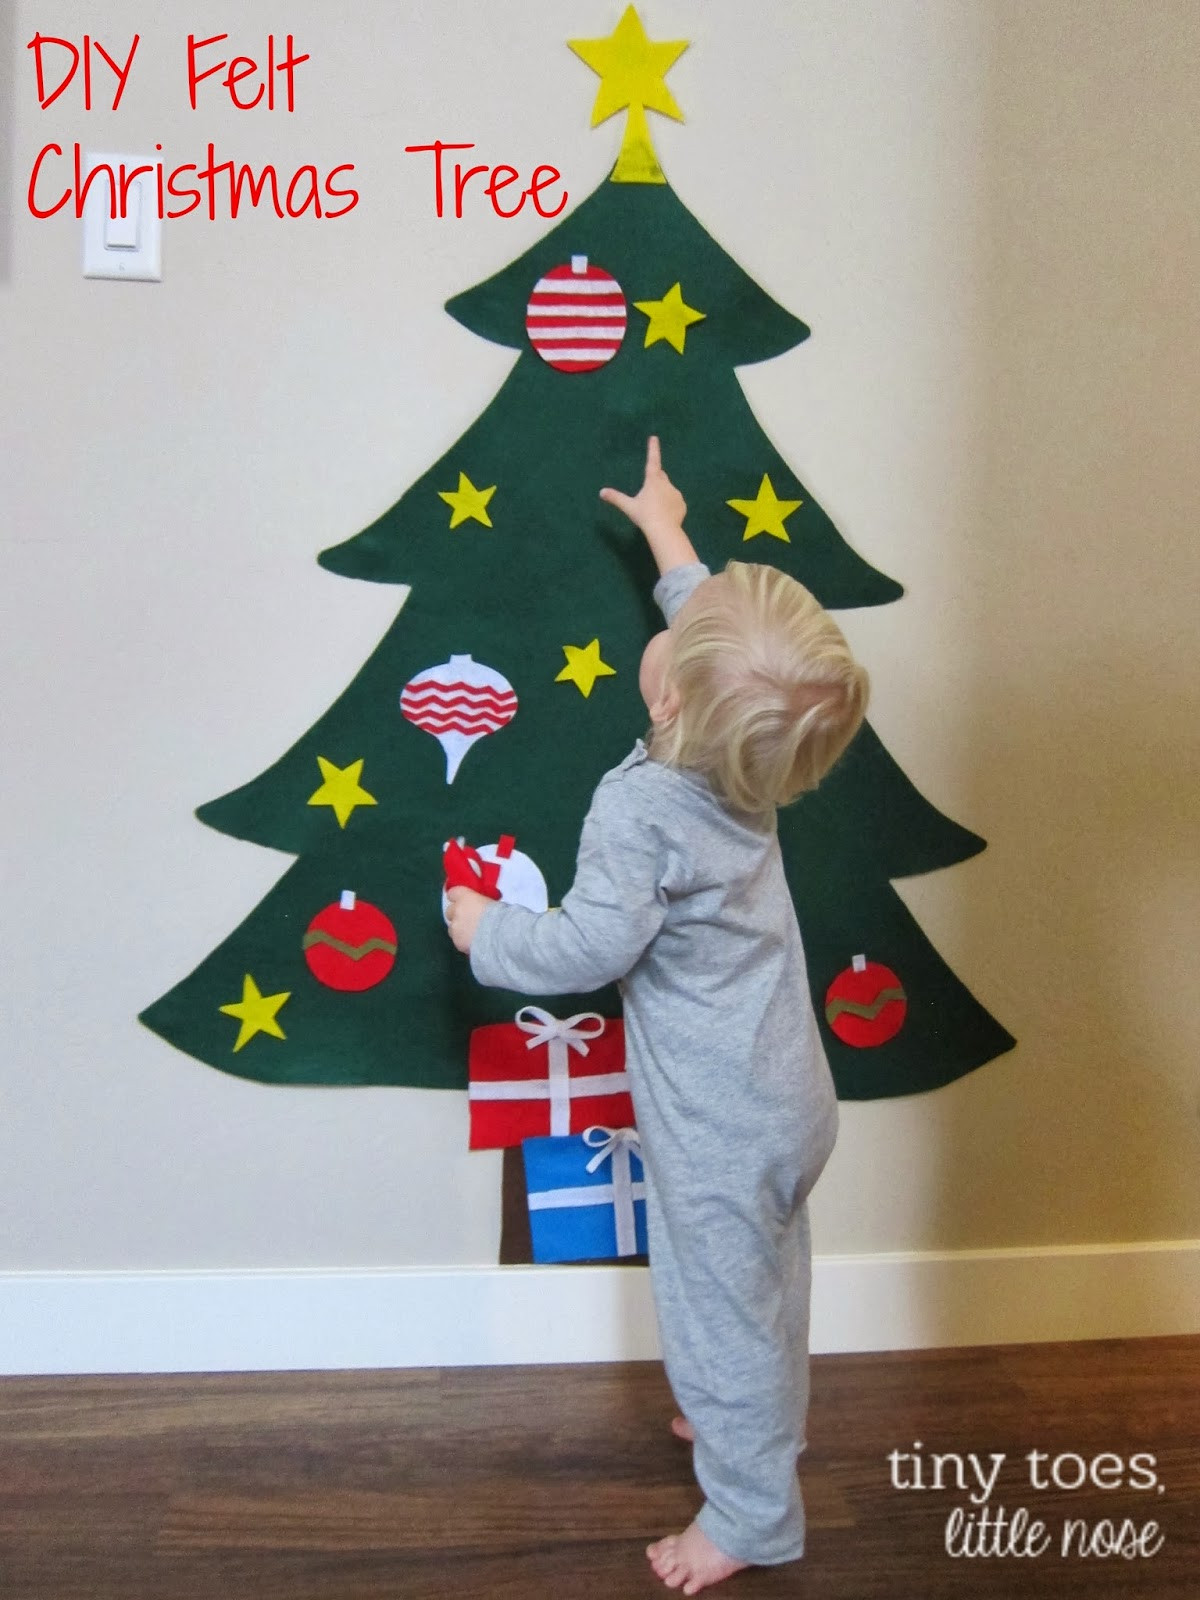 Best ideas about DIY Felt Christmas Tree
. Save or Pin laurabird DIY Felt Christmas Tree Now.